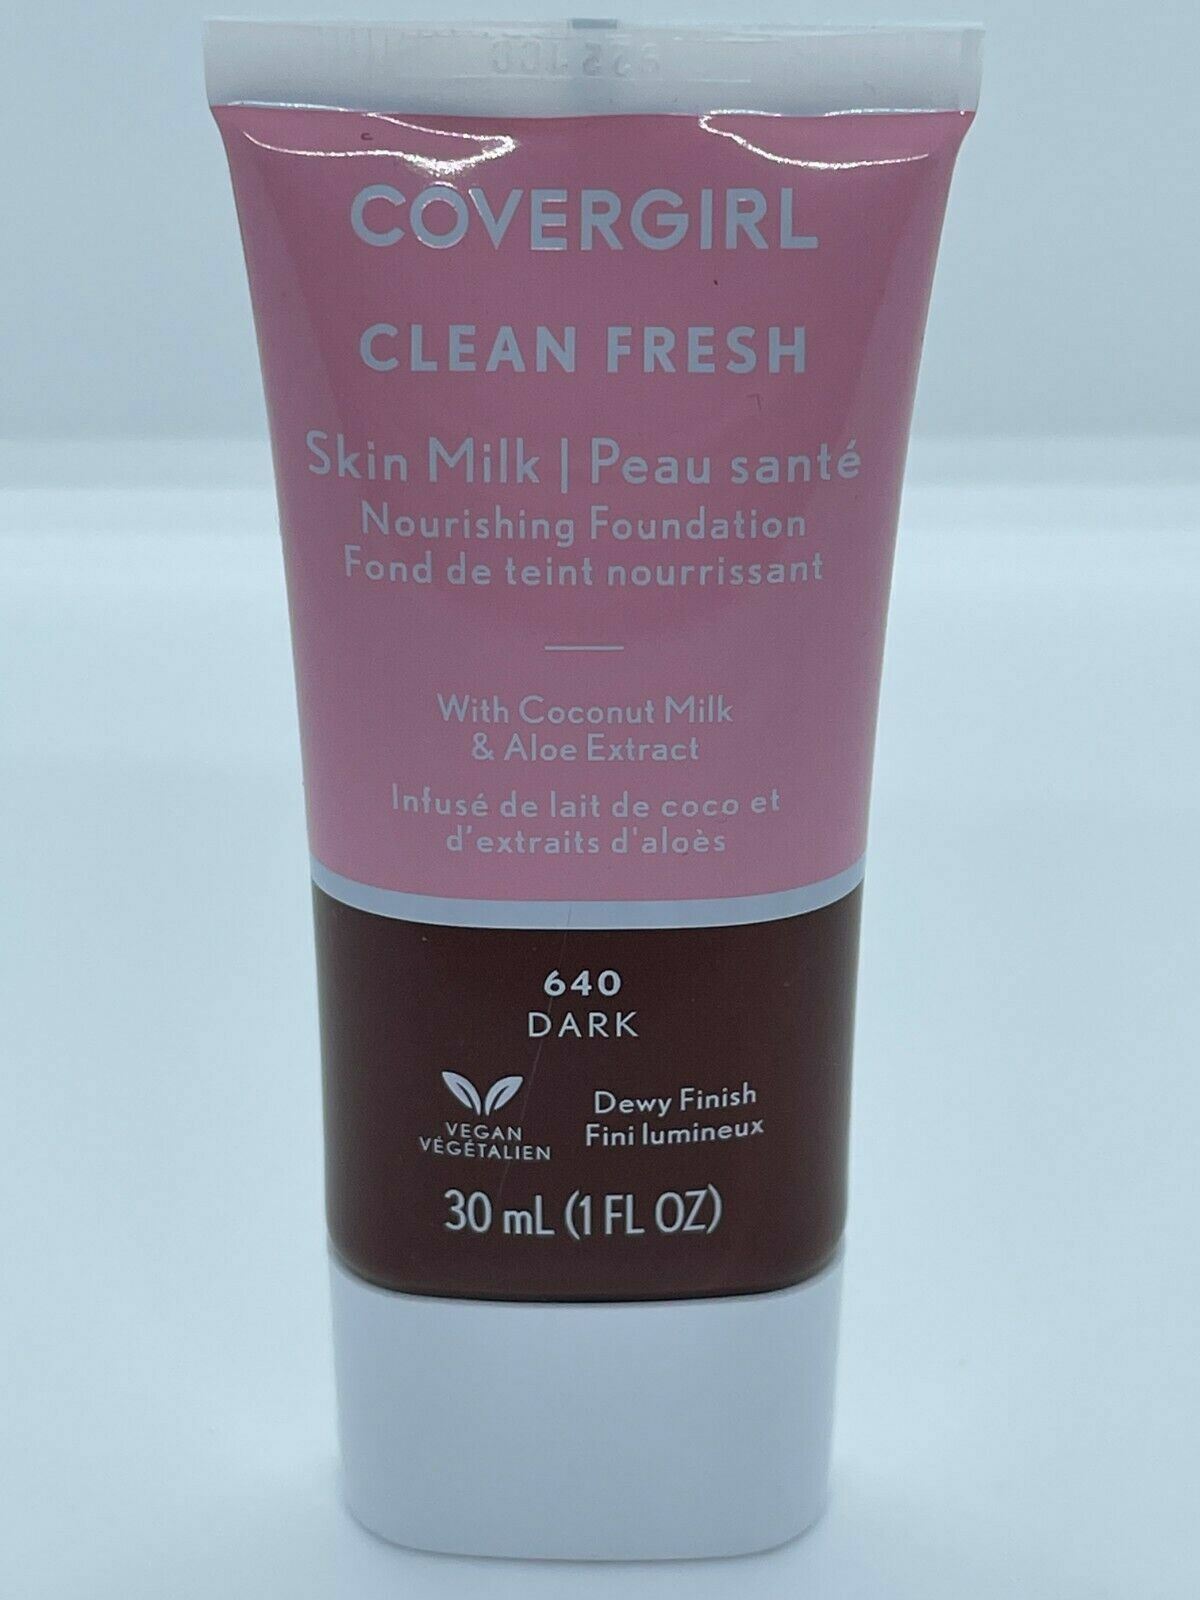 Primary image for Covergirl, Clean Fresh Skin Milk Foundation, 1 oz, 30 ml - Vegan, 640 Dark